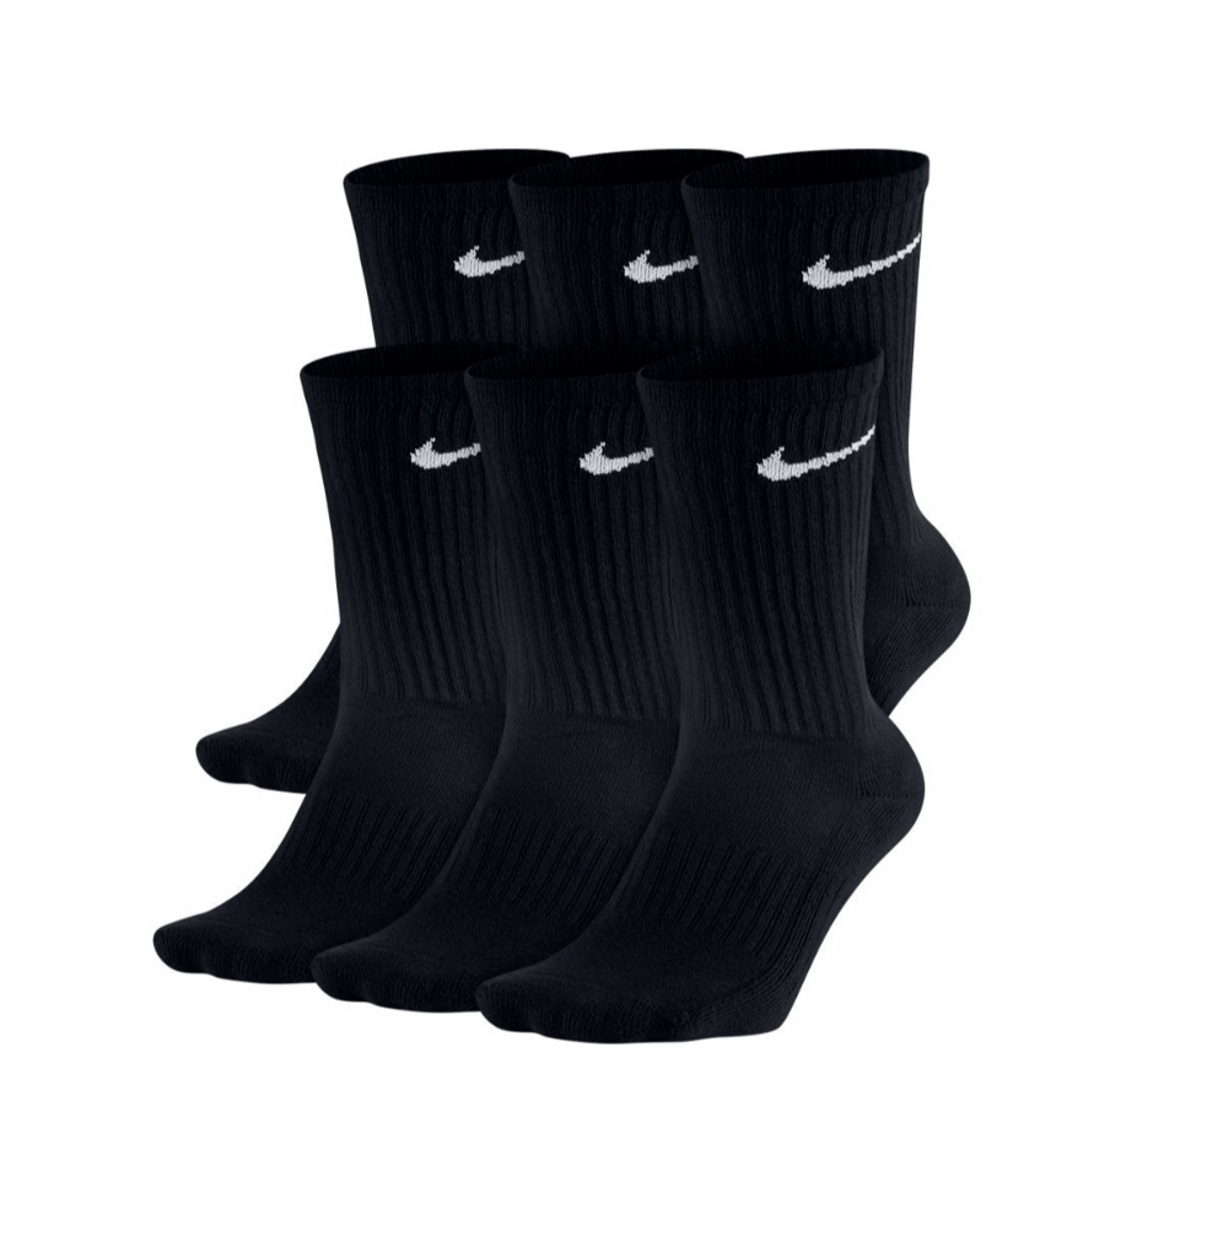 Nike Mens Dri Fit Cushion Crew 6 Pack Socks Black